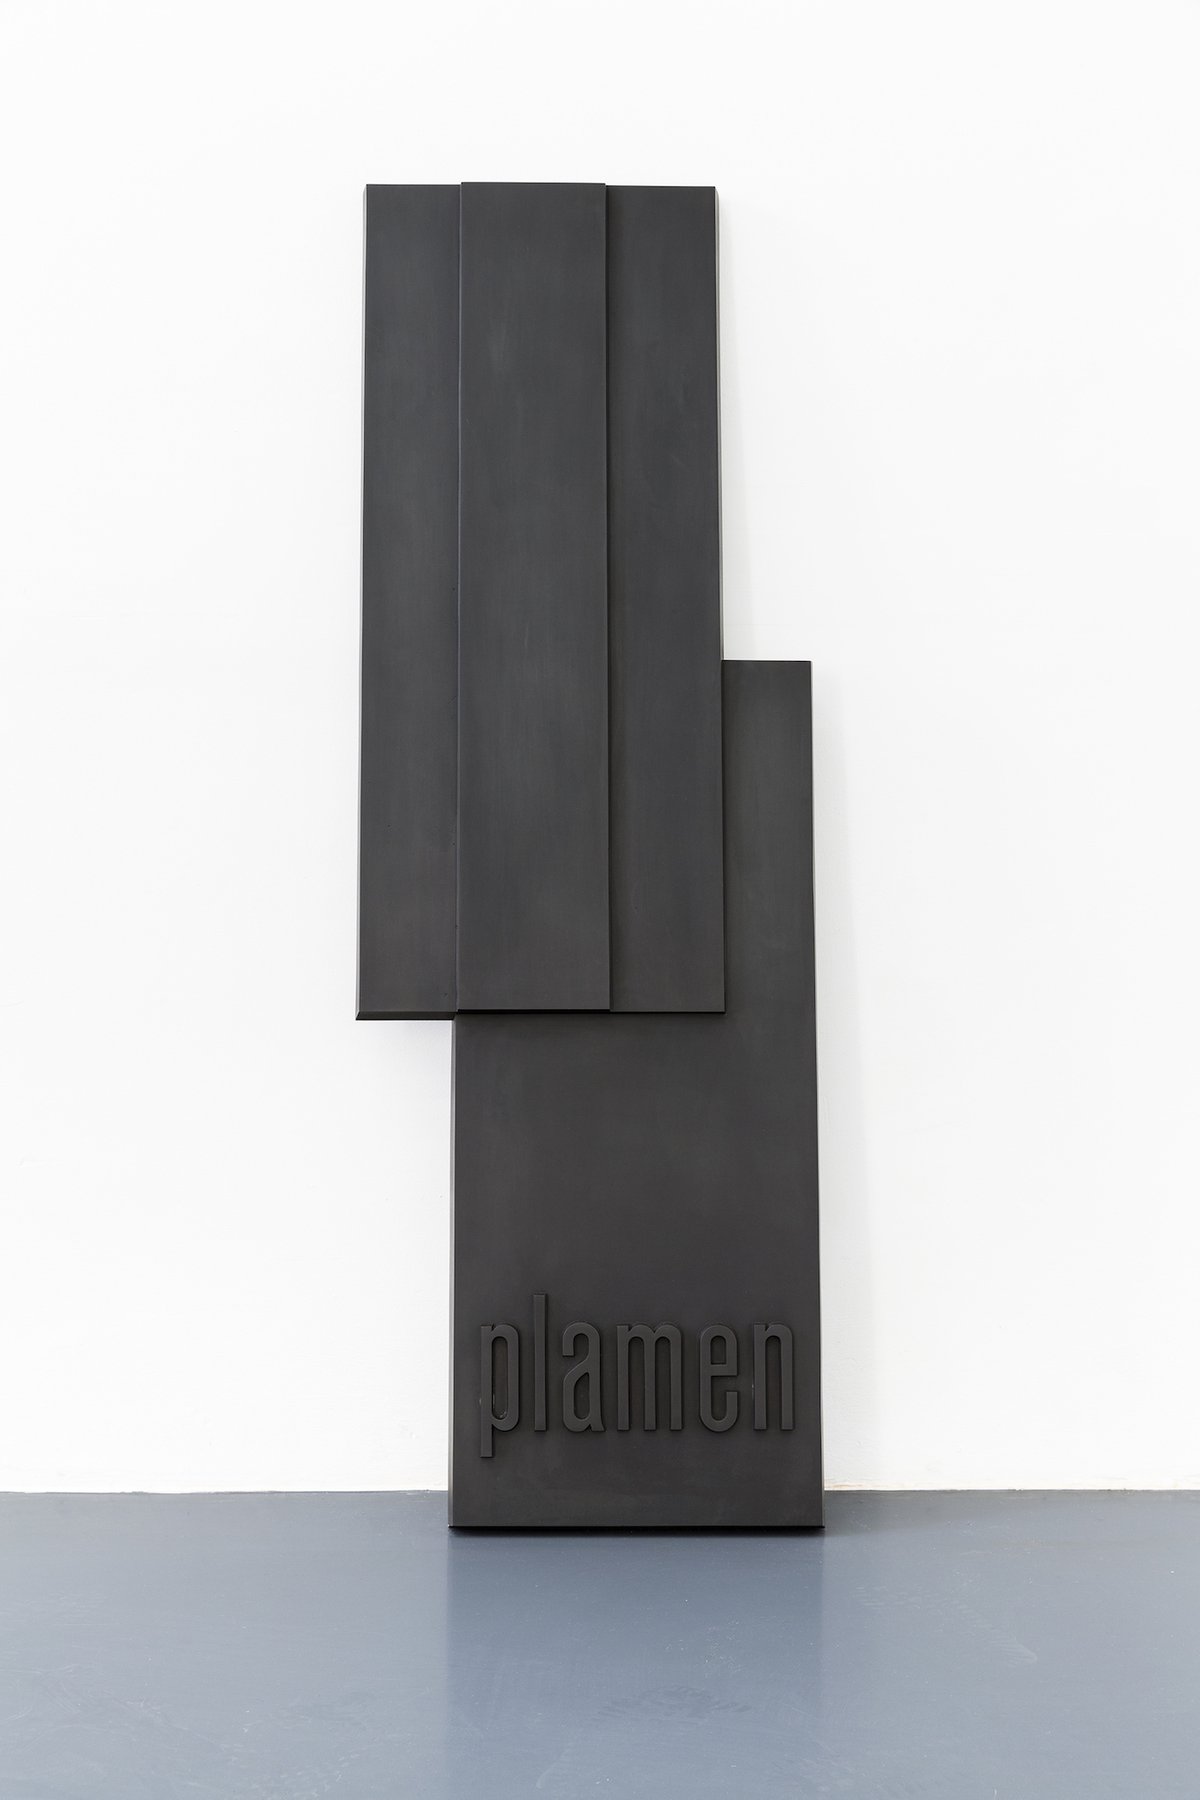 Plamen DejanoffUntitled, 2015Bronze162 x 55 x 7 cm